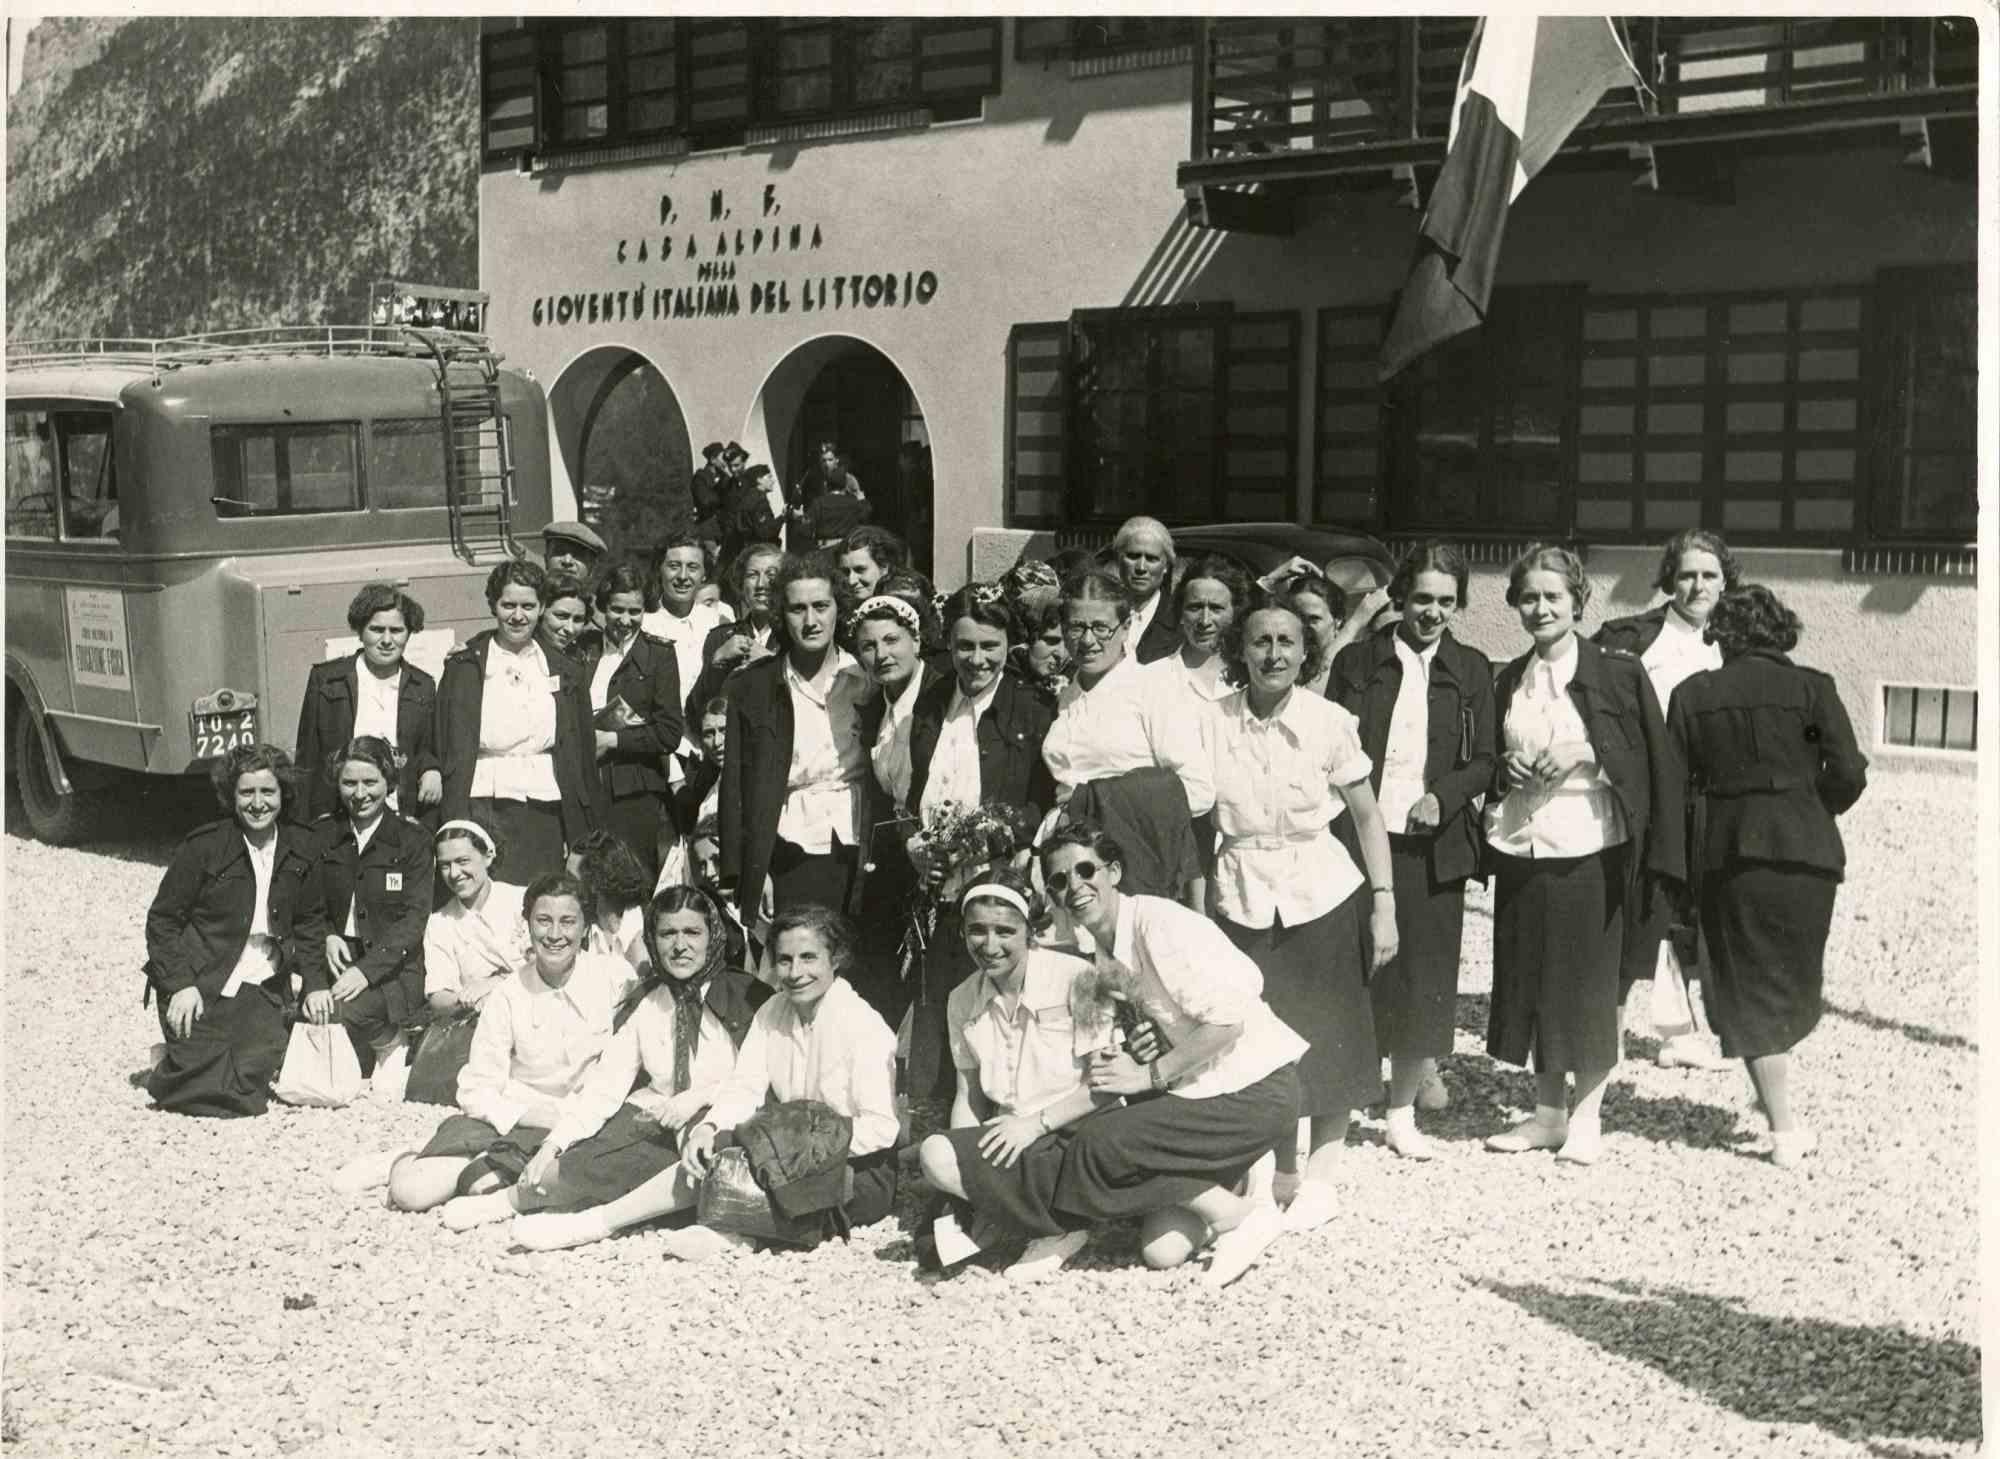 Unknown Black and White Photograph - Casa Alpina - B/W Photograph - 1930's